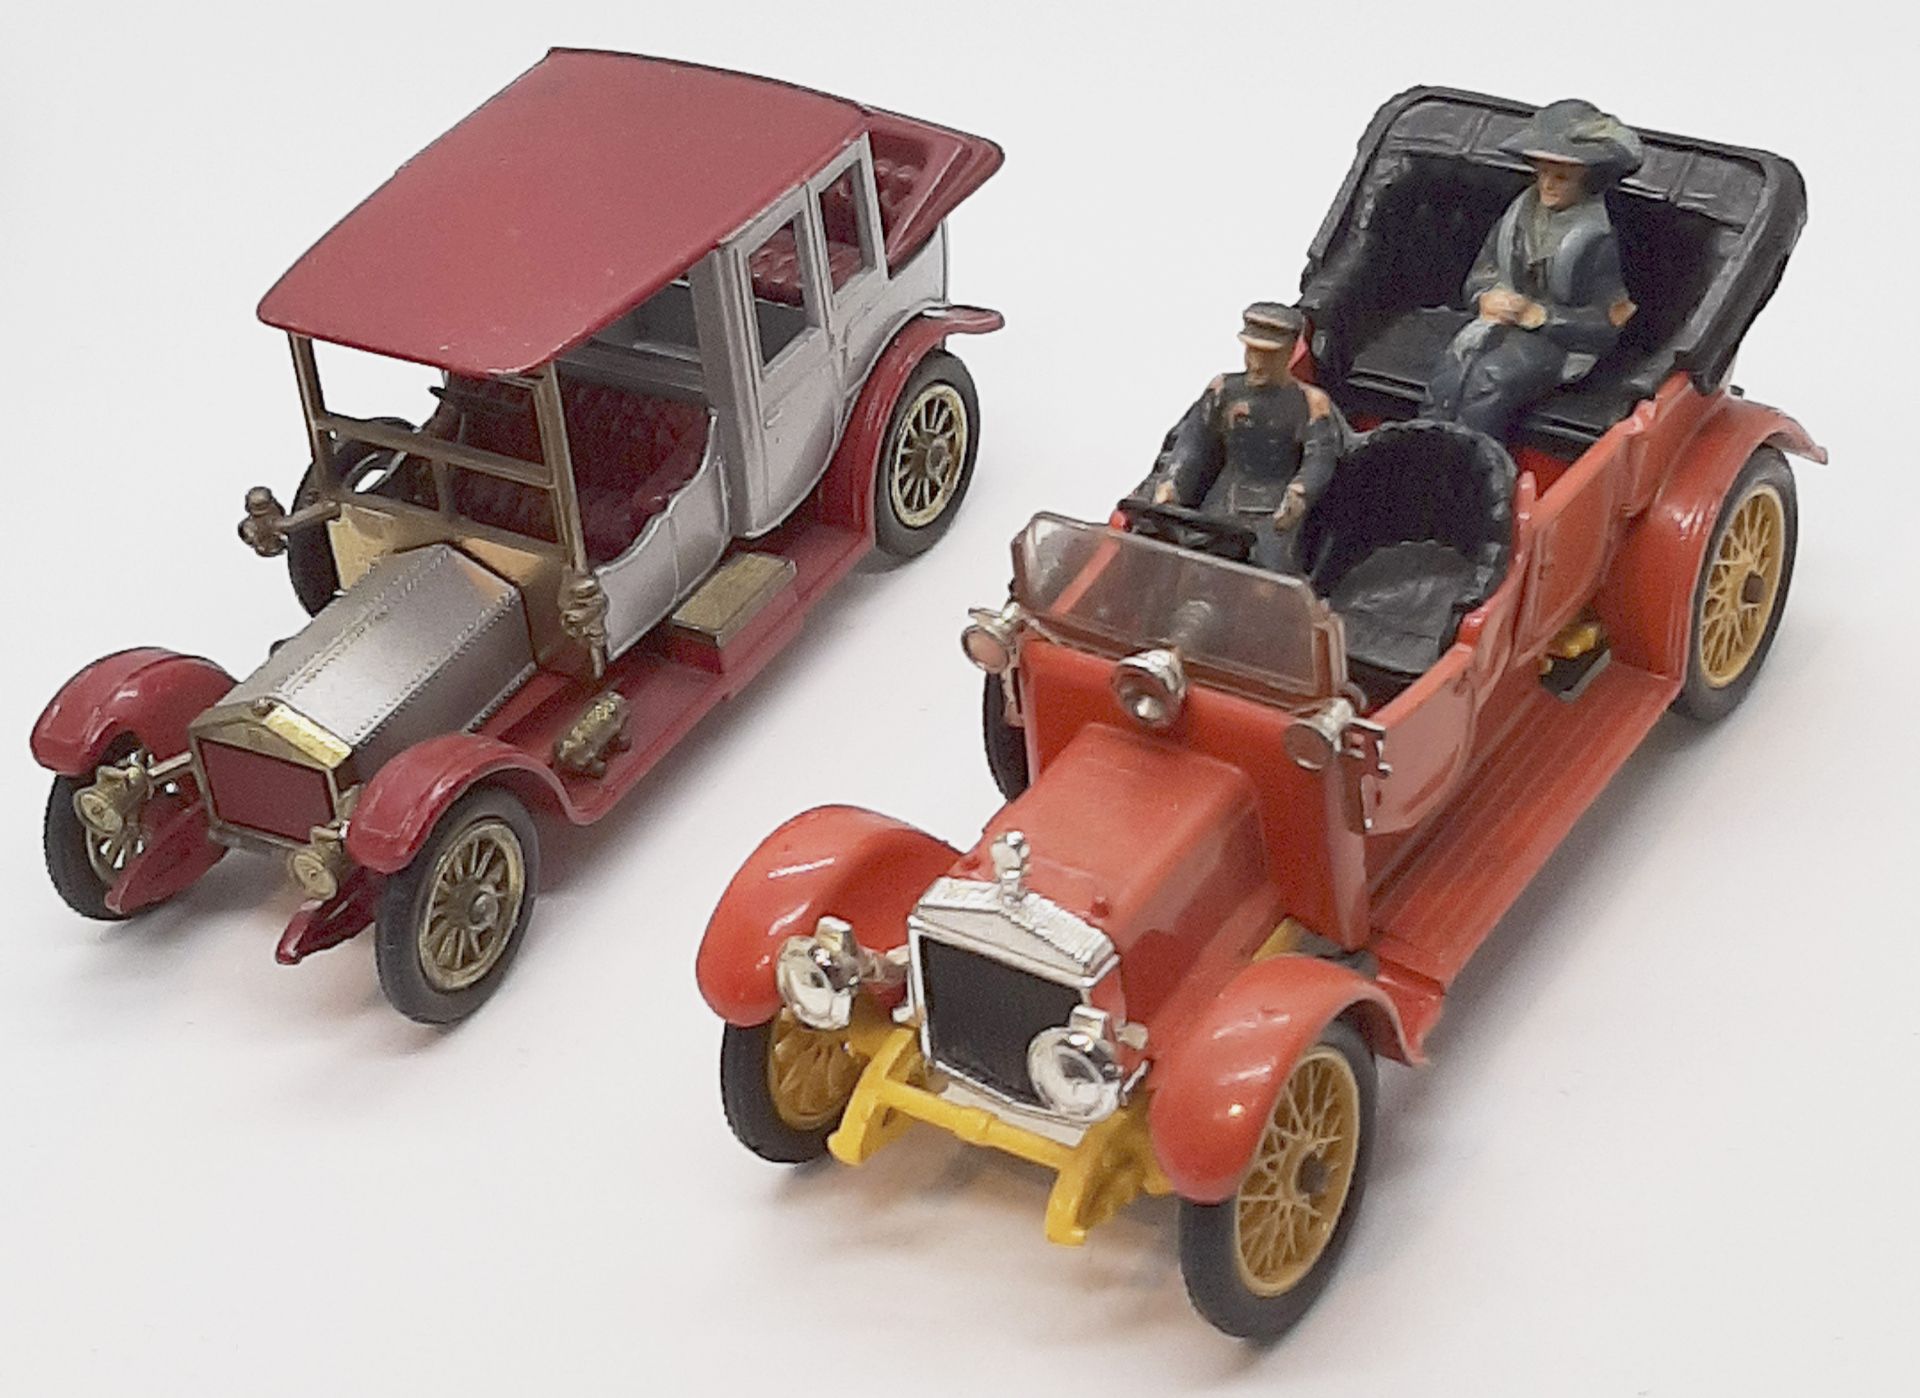 Corgi Classics Daimler 1910 mit zwei Figuren und Matchbox Models of Yesteryear Y - 7, Rolls Royce